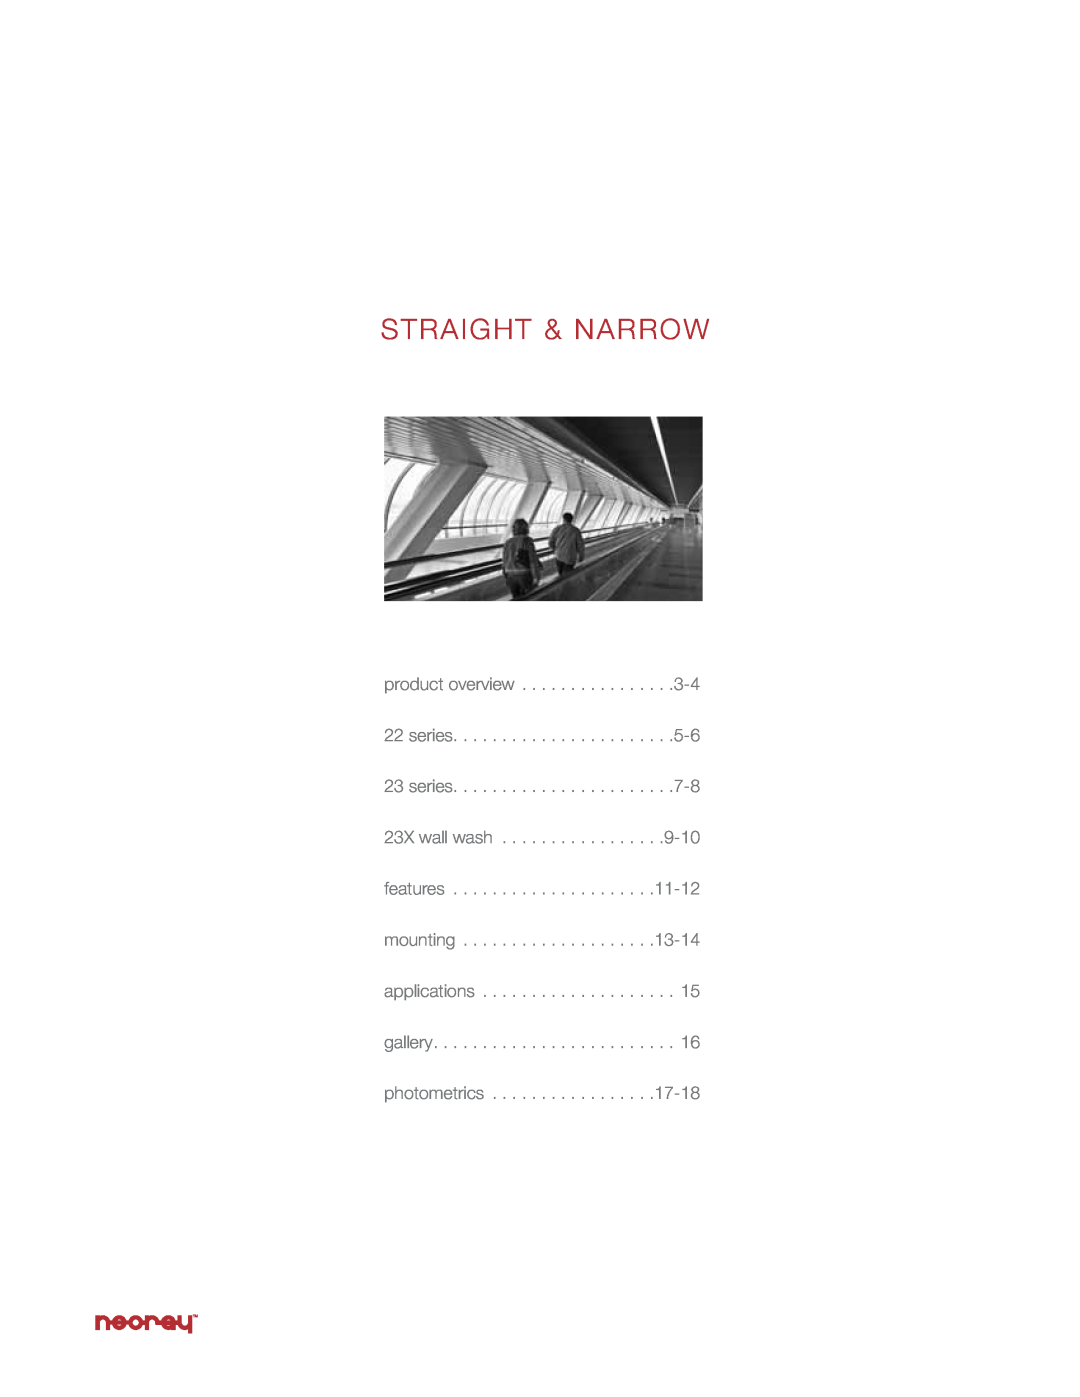 Cooper Lighting 23X manual Straight & Narrow 